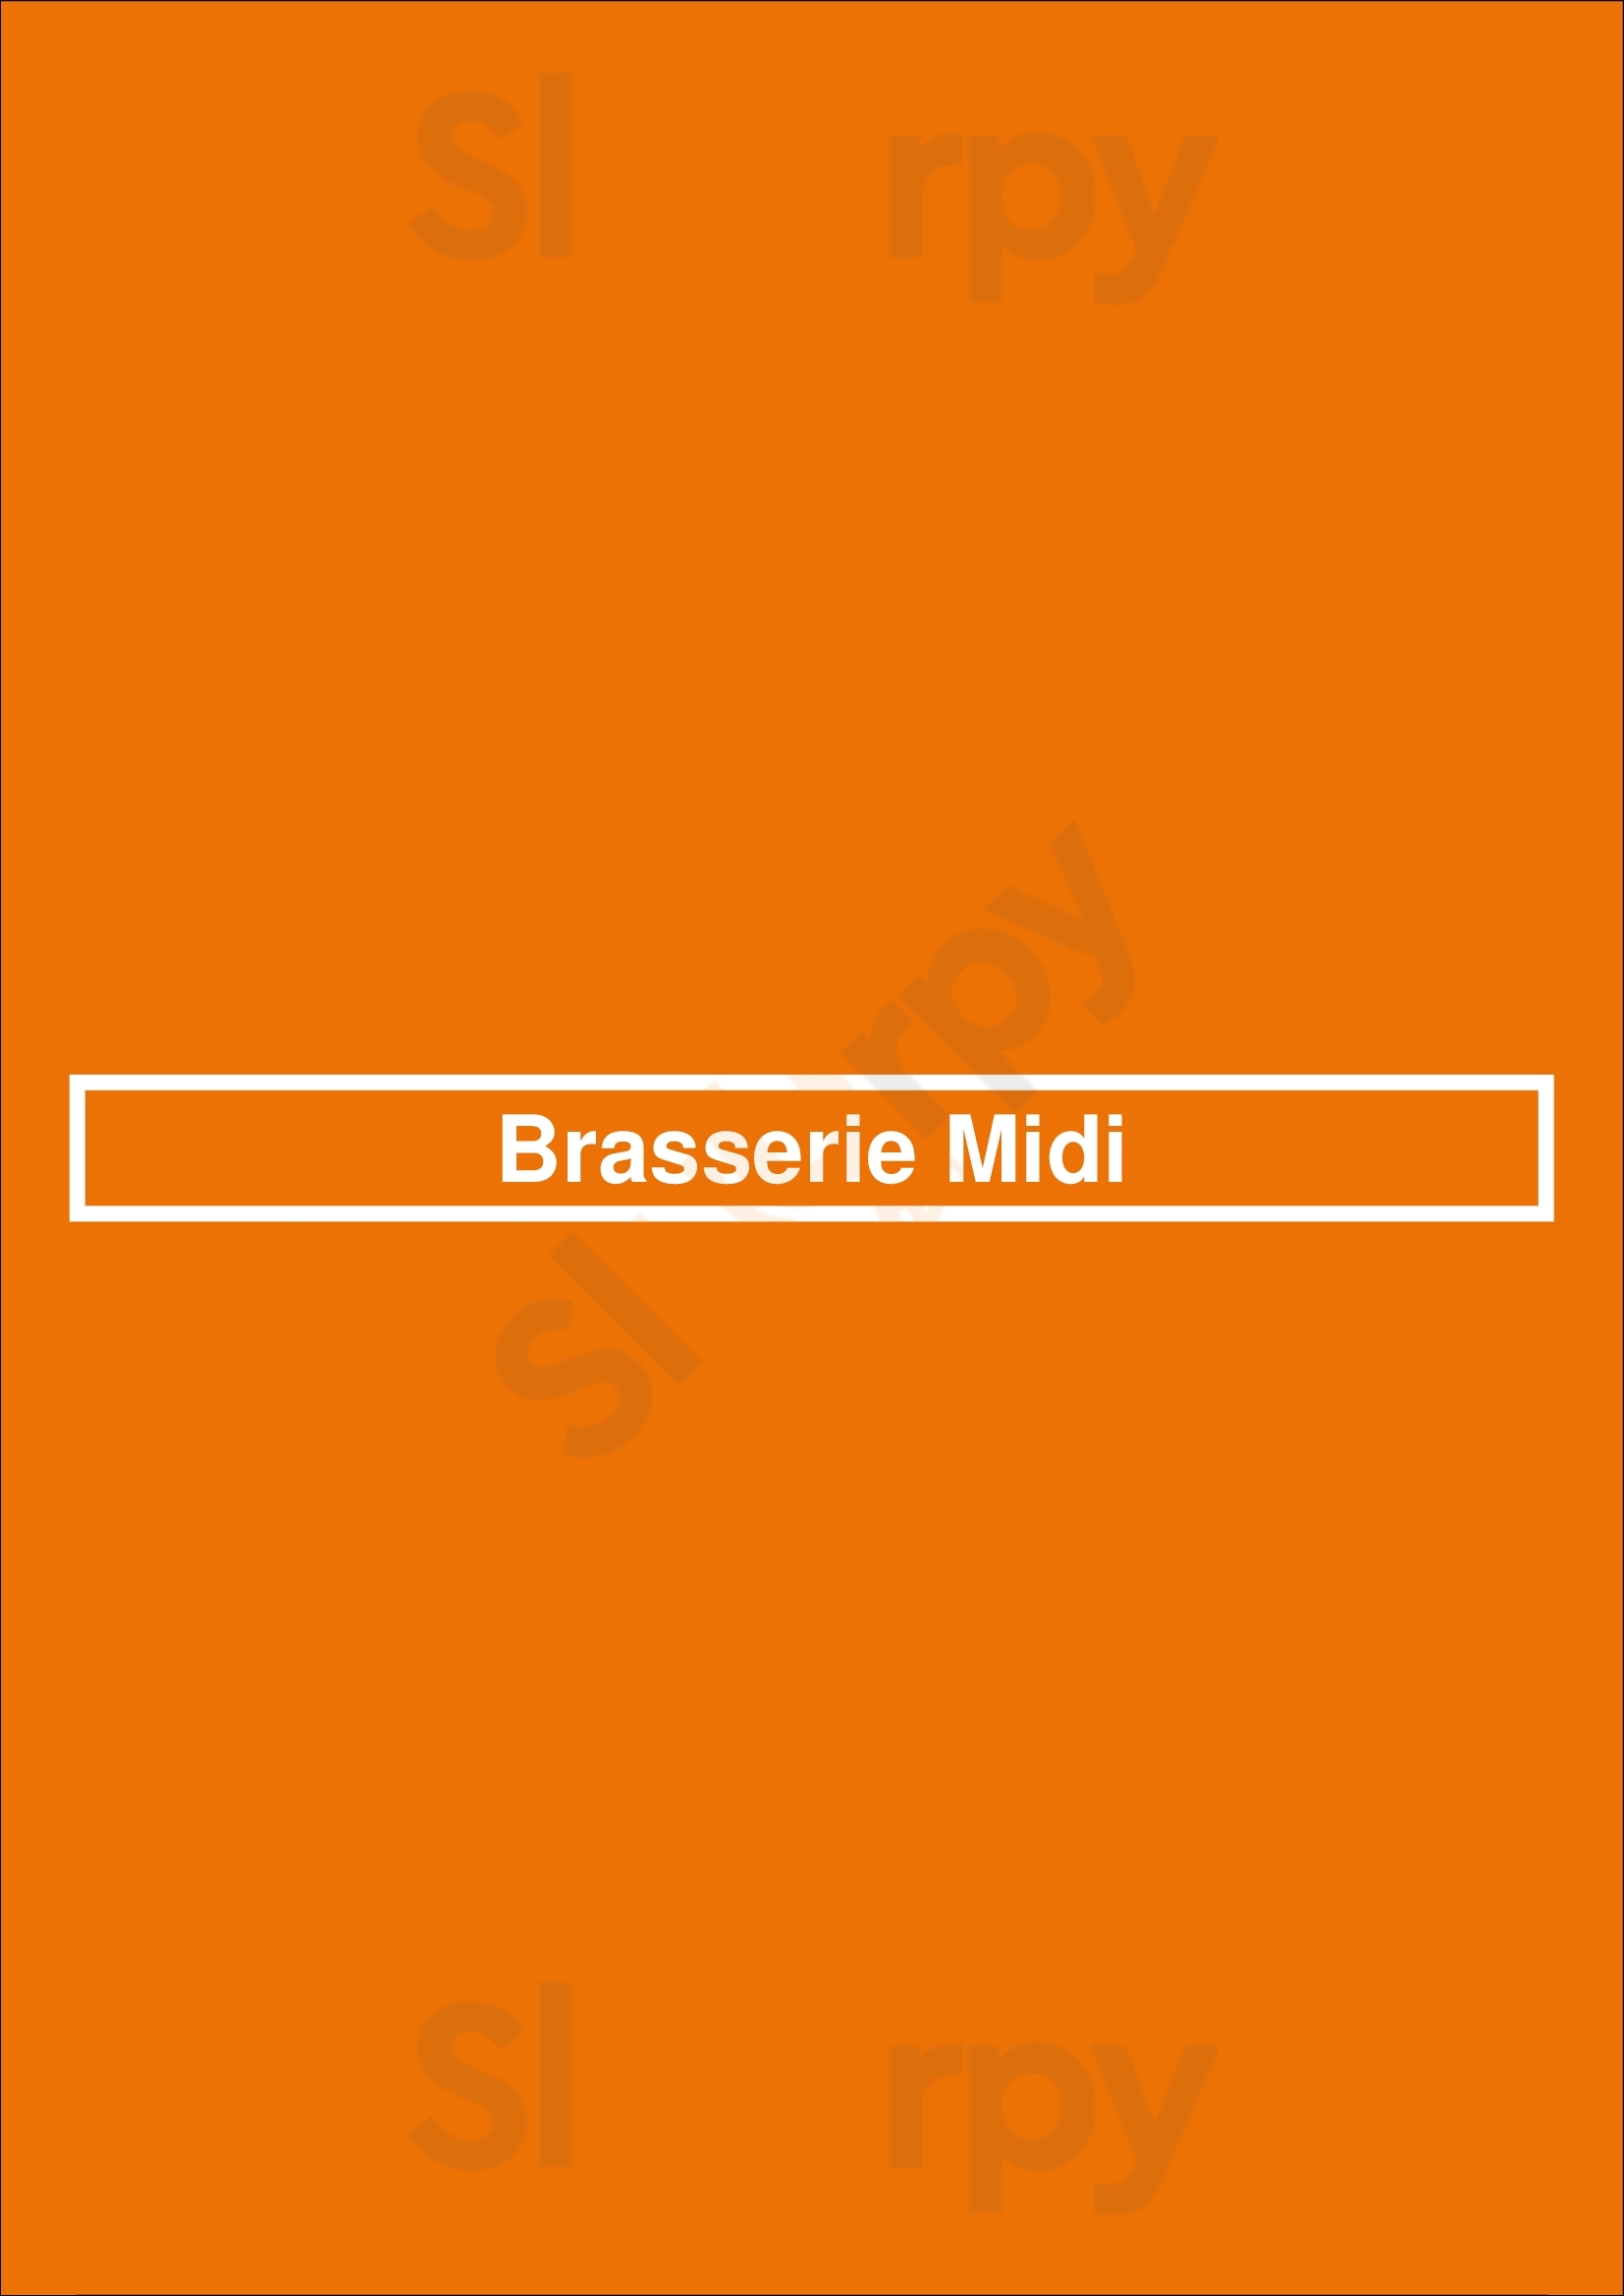 Brasserie Midi Groningen Menu - 1